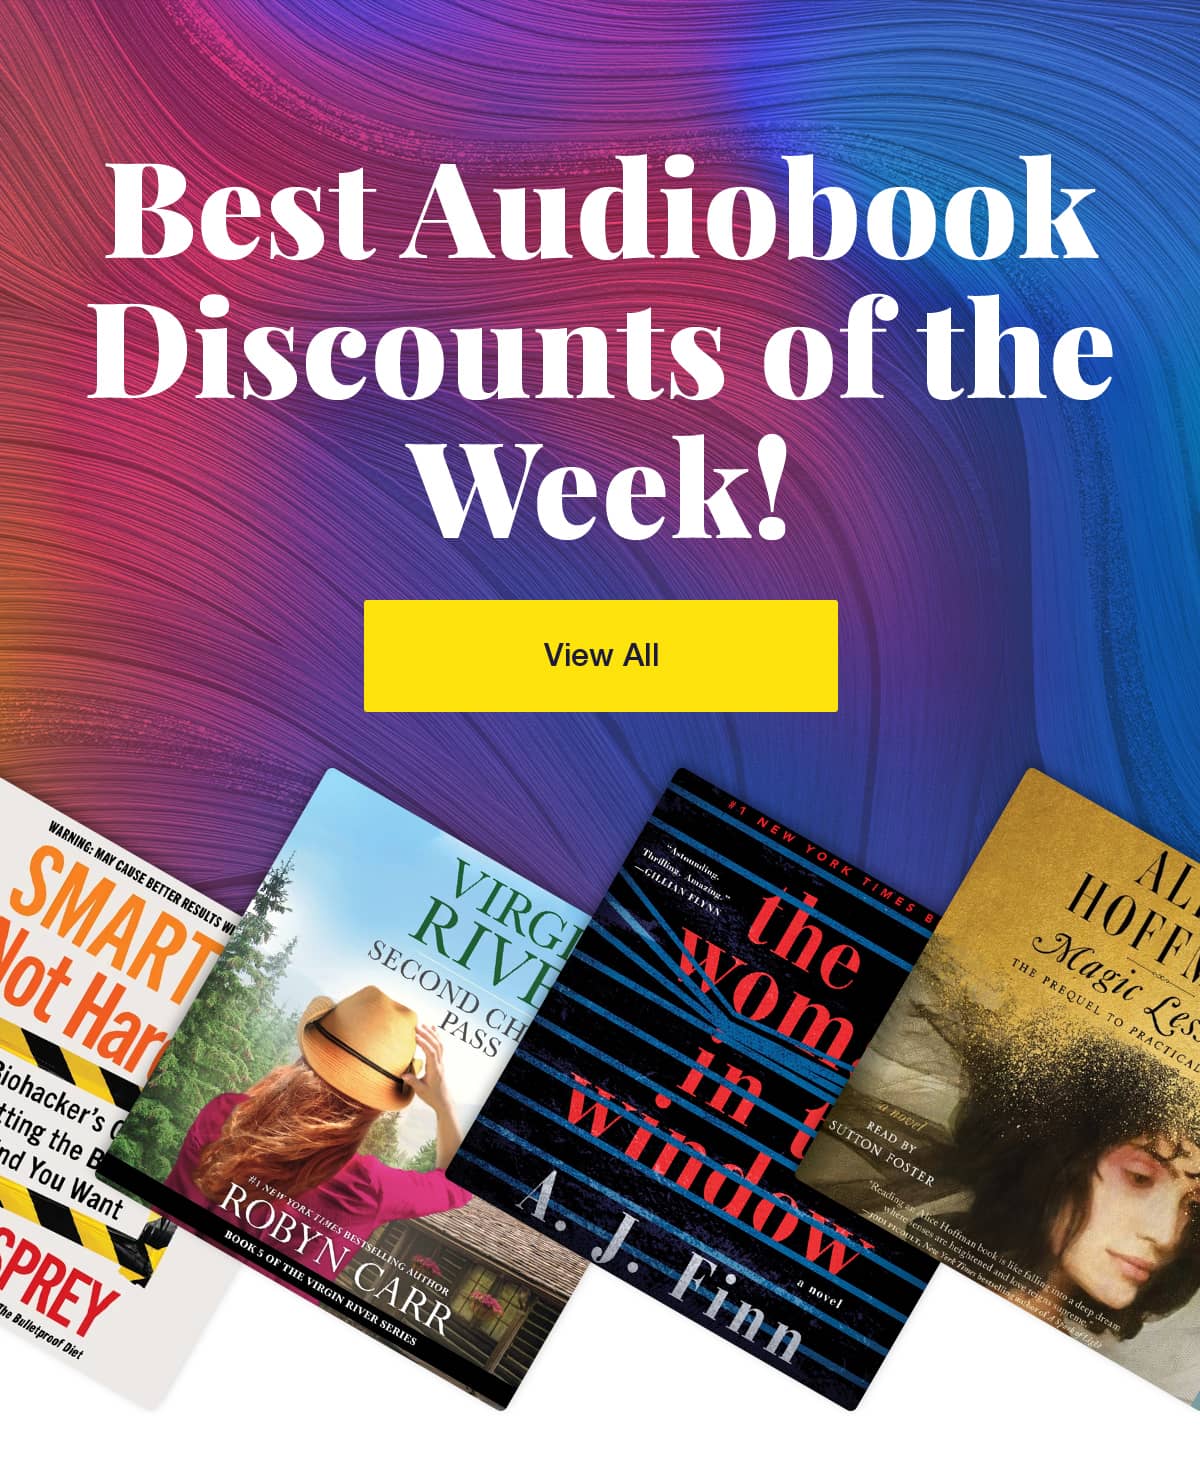 Best Audiobook Discounts of the Week!